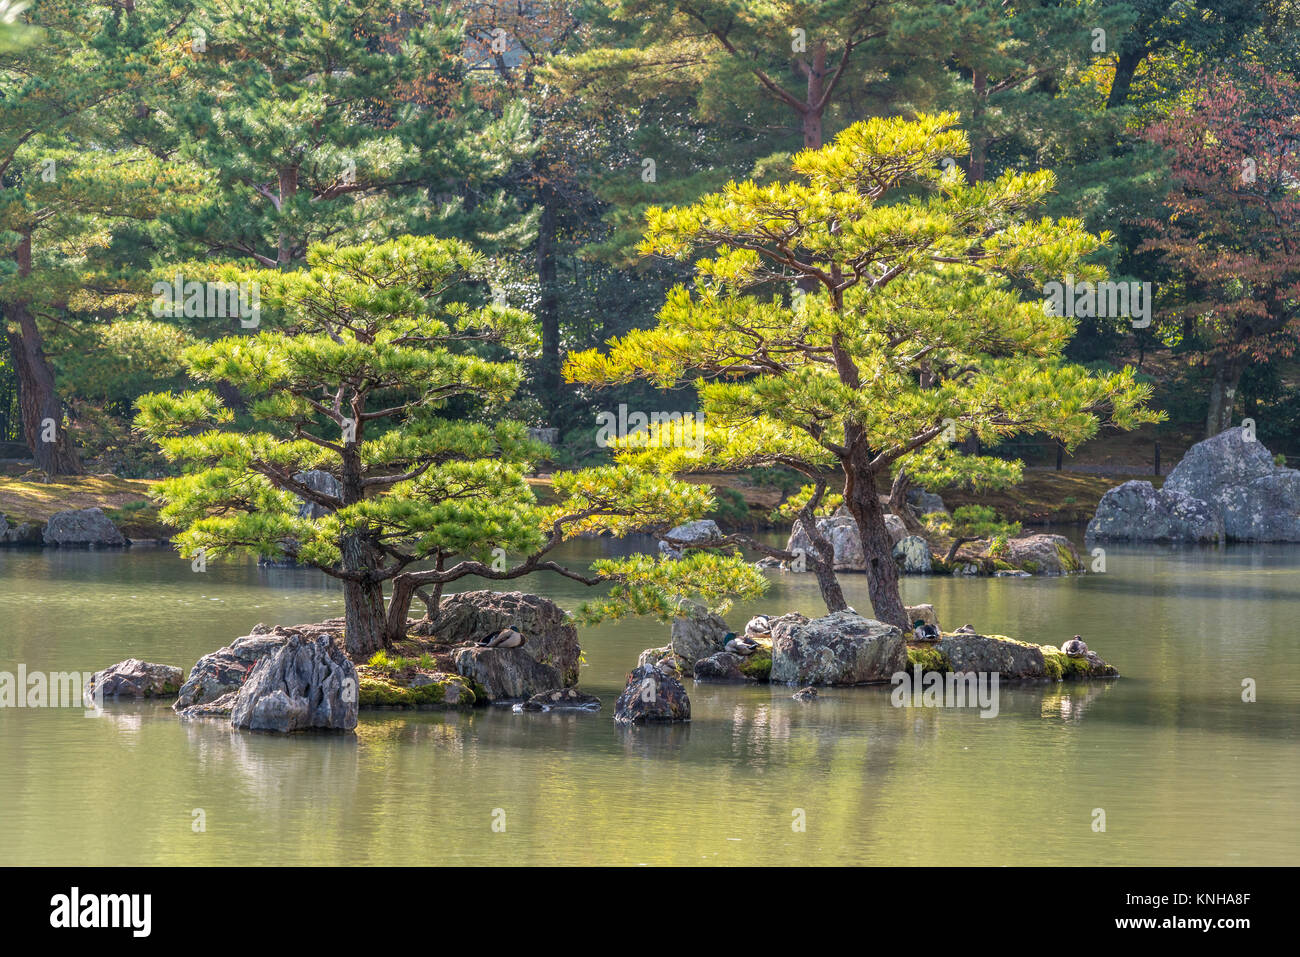 Pinus thunbergii or Japanese black pine (Kuromatsu) On an islet near Kinkaku-ji (Golden Pavilion) temple. Autumn colors and Fall foliage in the back Stock Photo